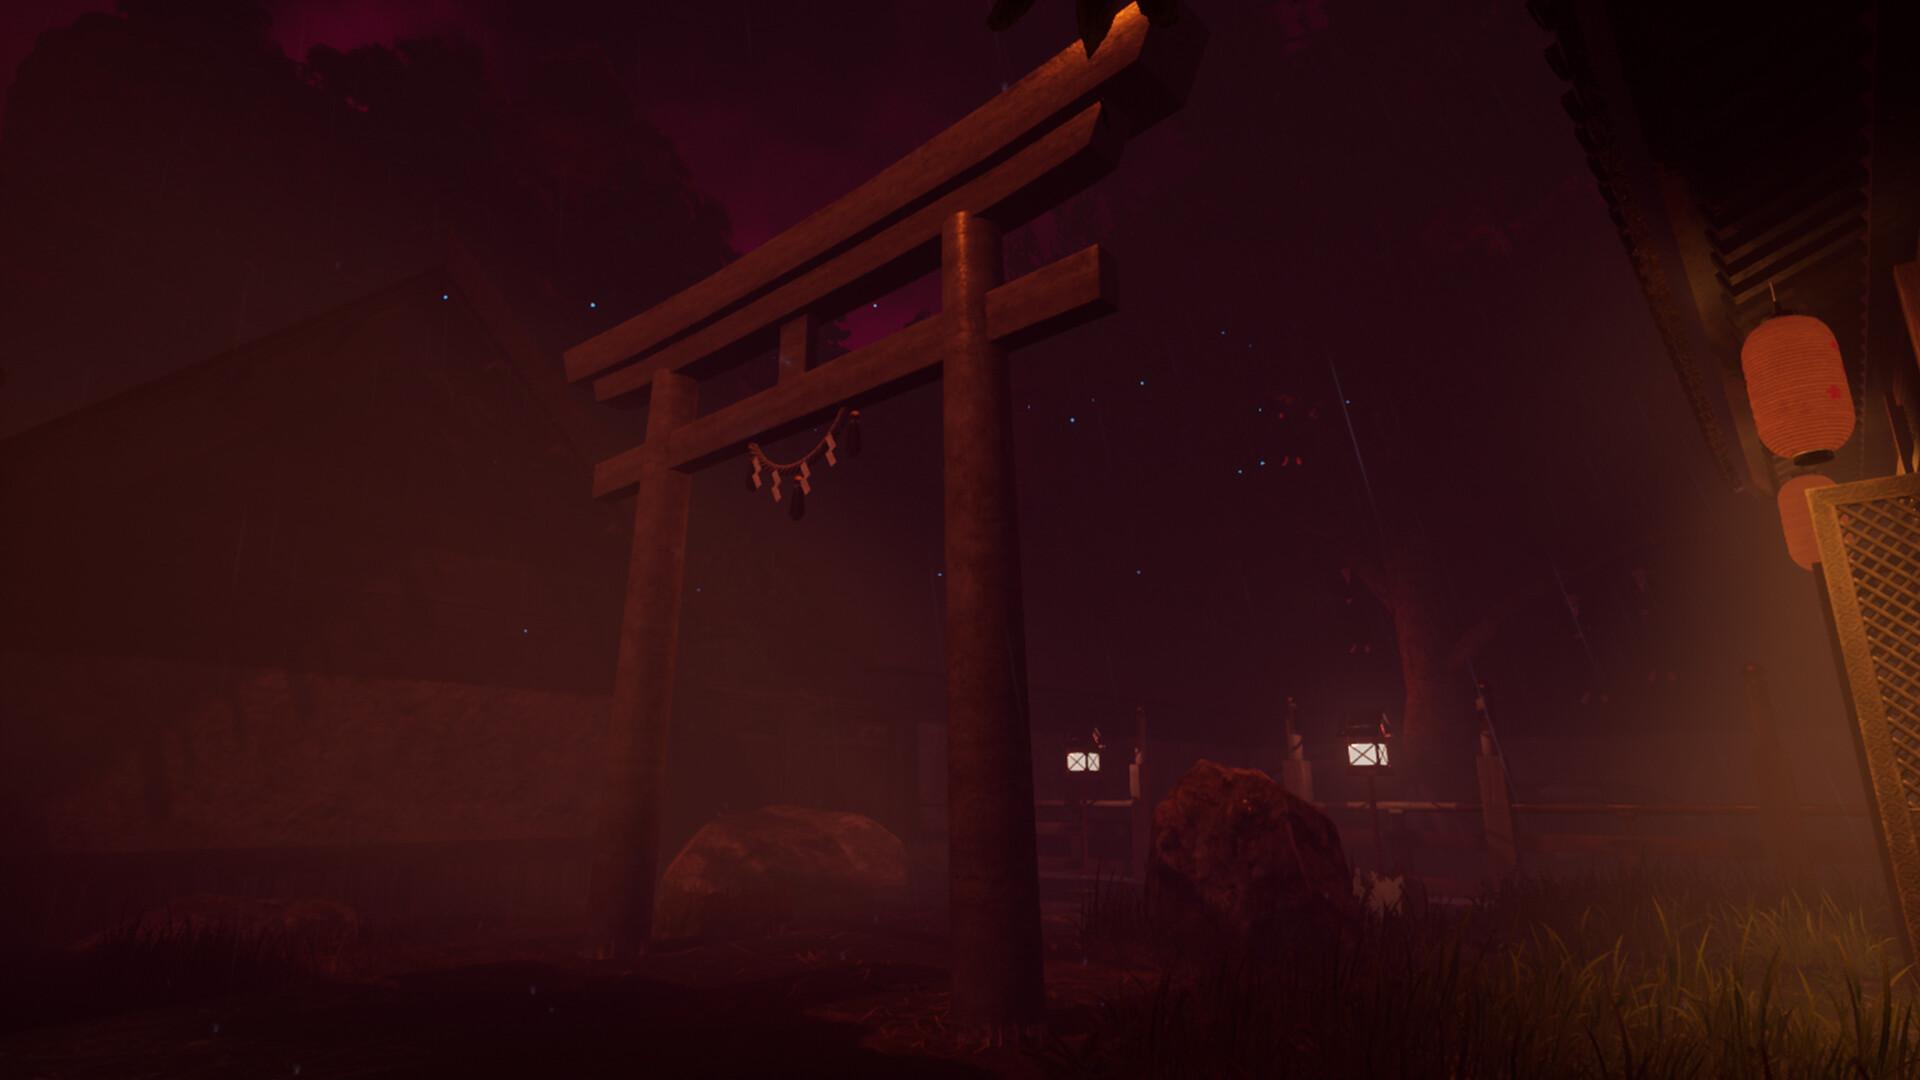 Screenshot №30 from game Malice